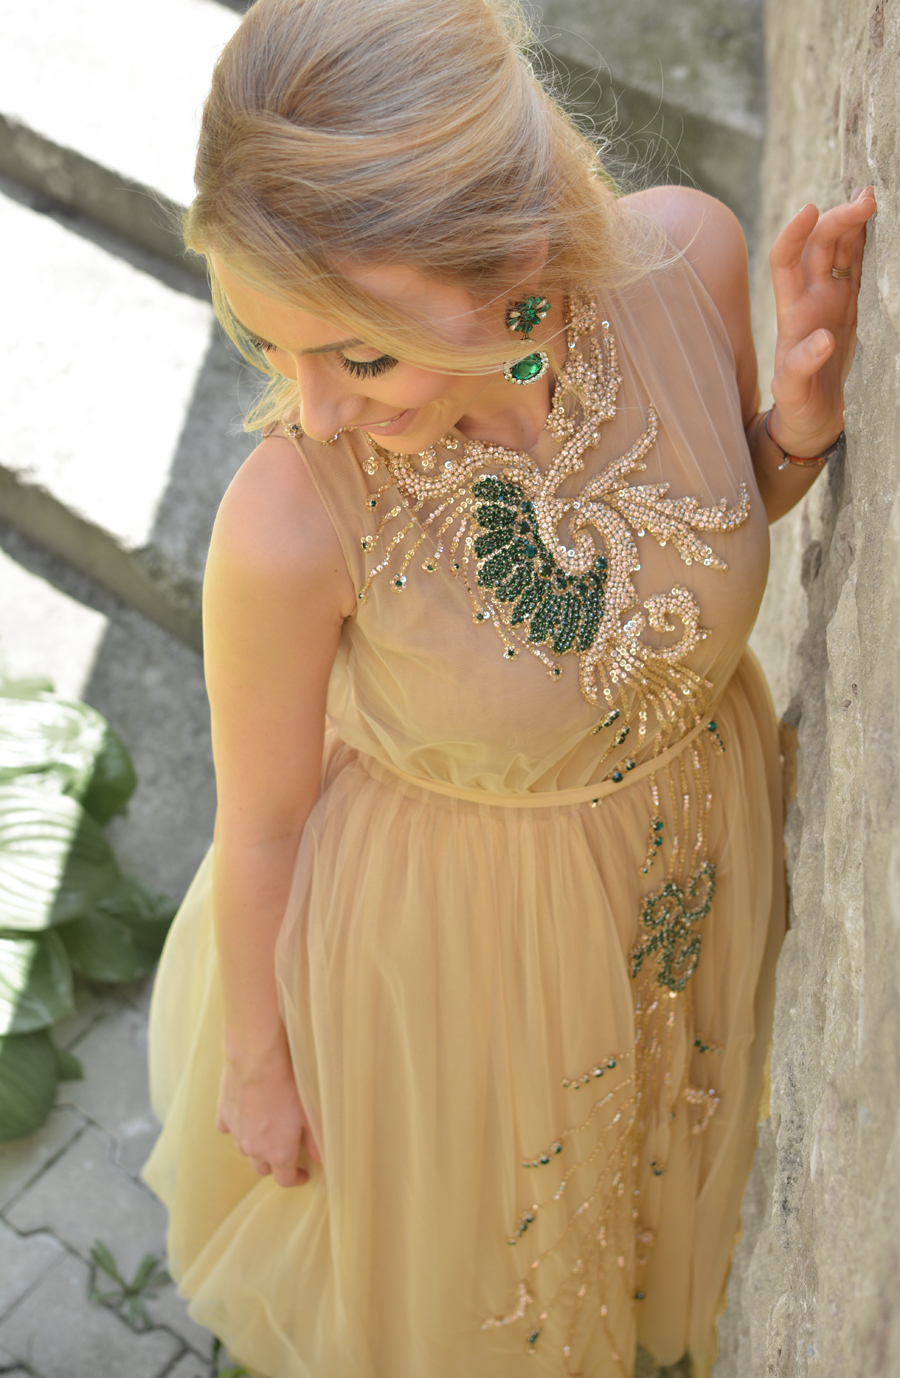 Fairytale Dress by Natasa Pejovic - P1 concept store / Stasha Fashion Blog